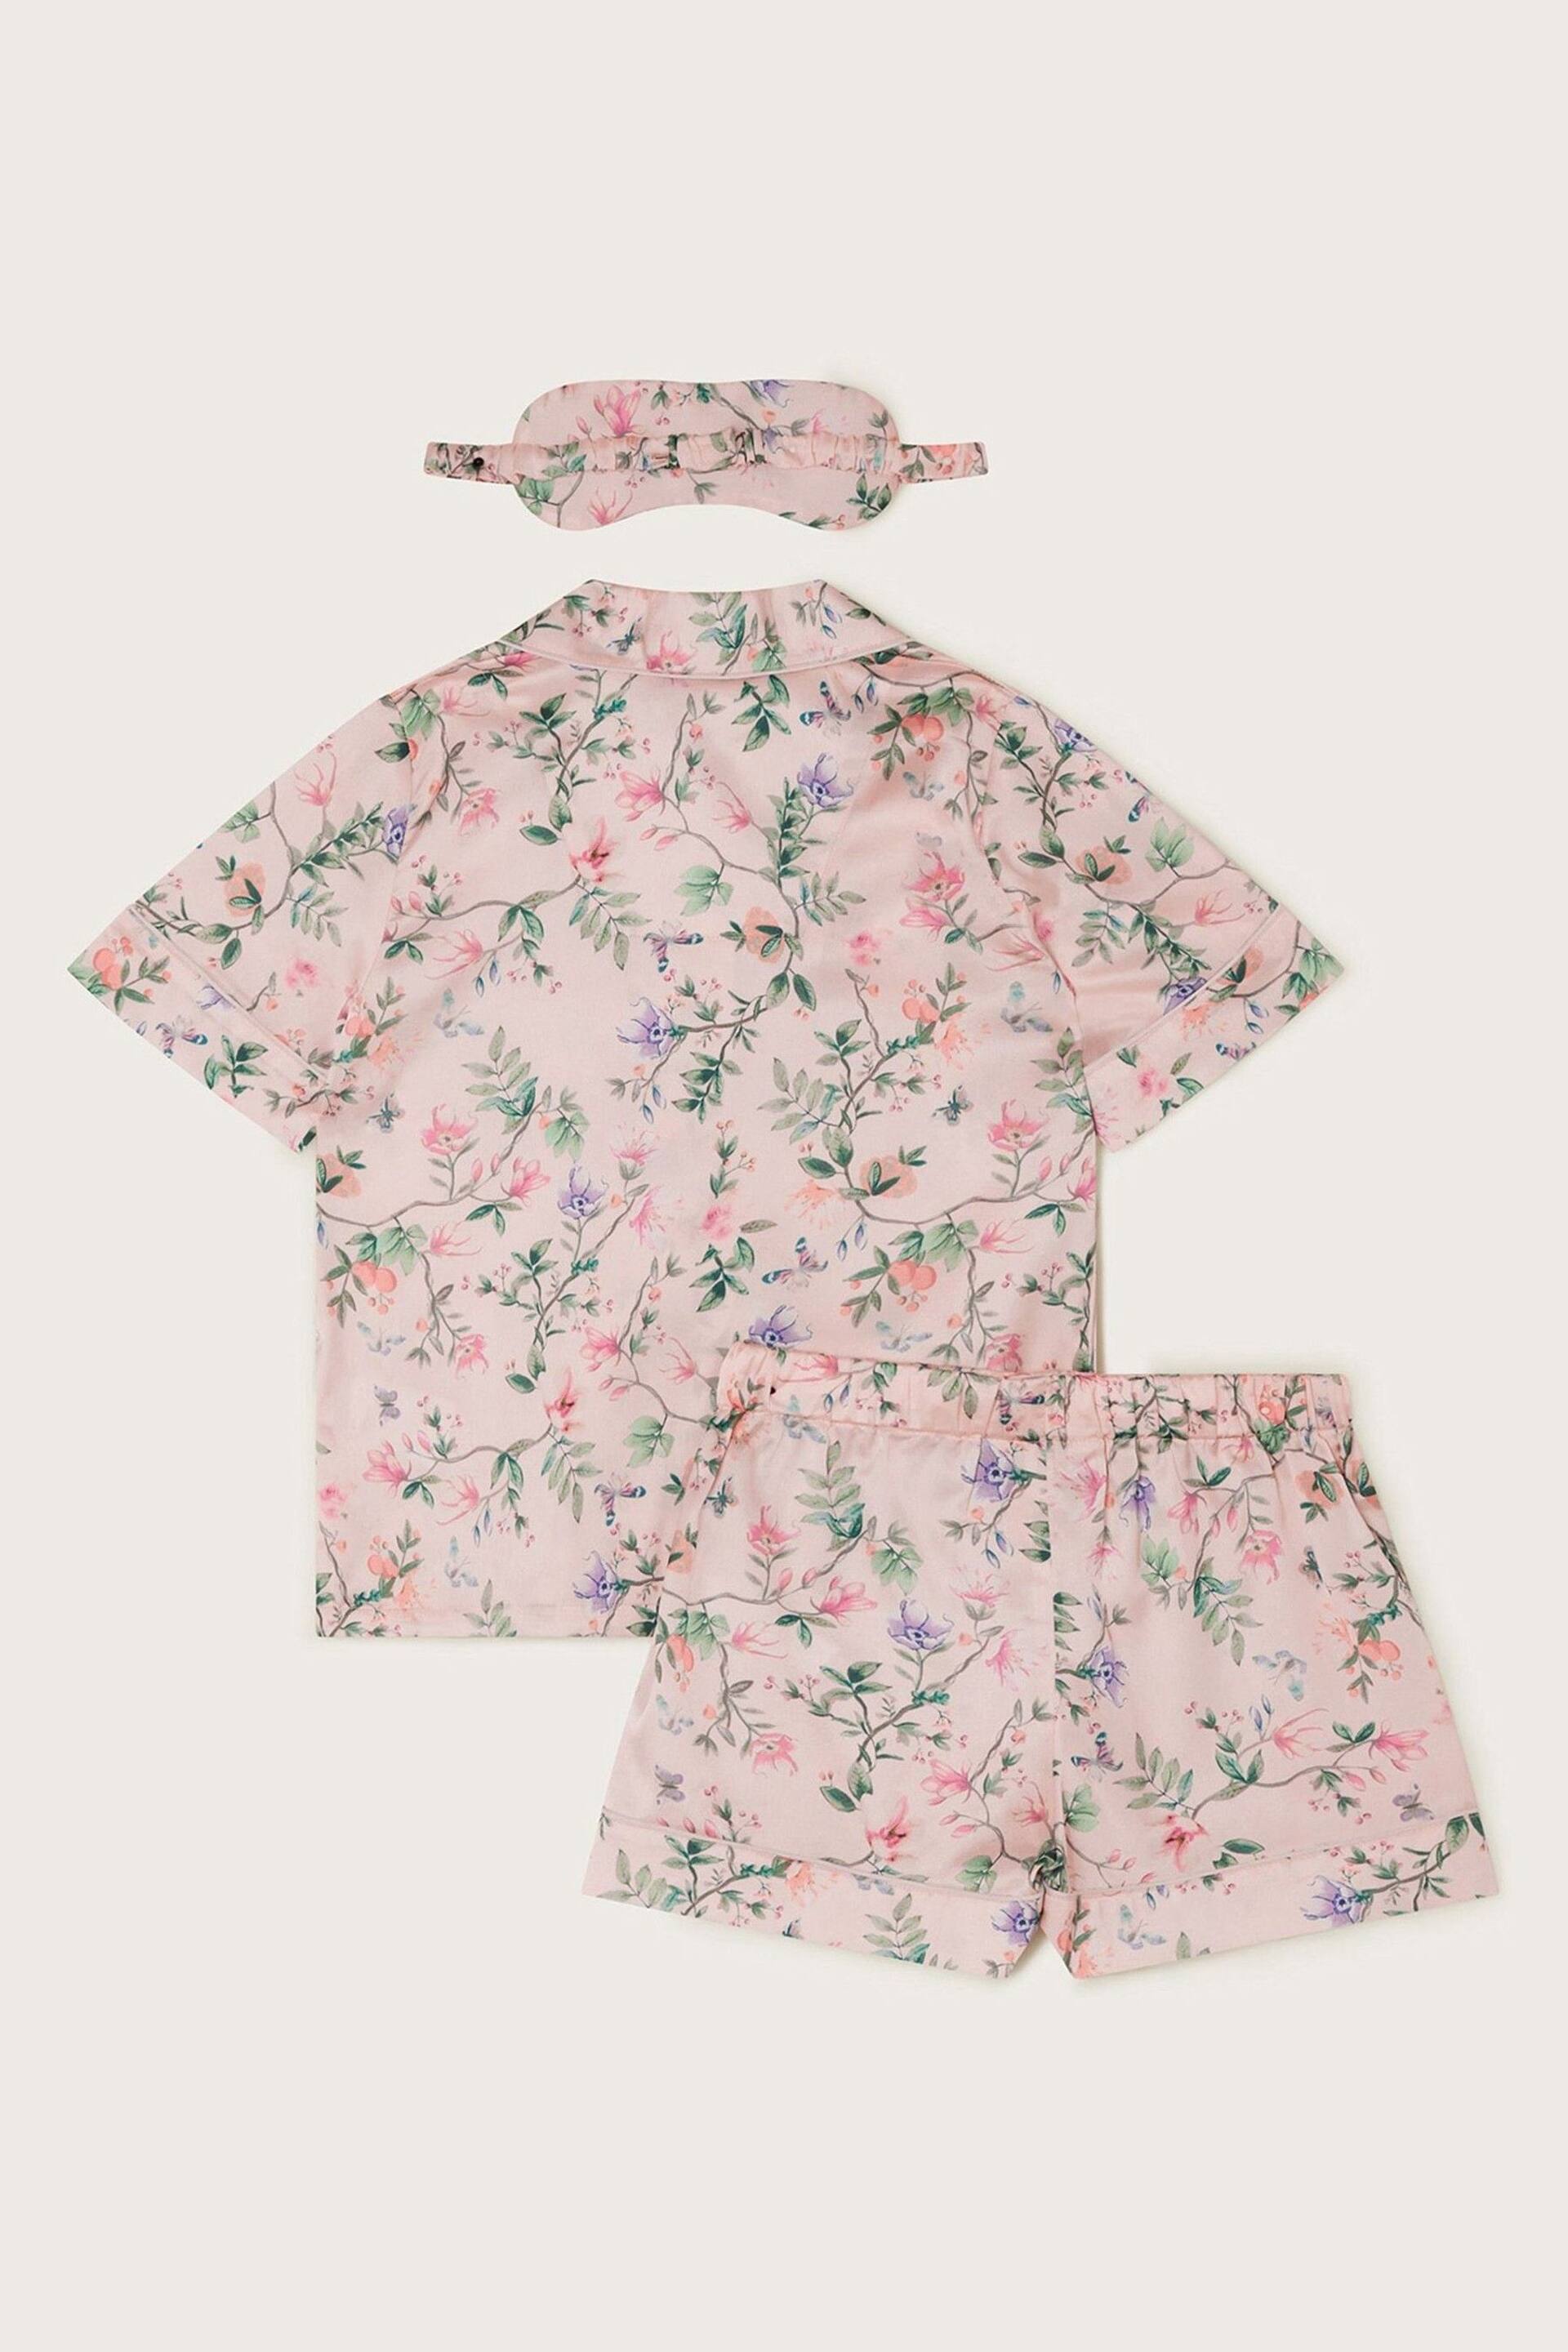 Monsoon Pink Hydrangea Satin Shorts Pyjama Set - Image 2 of 3